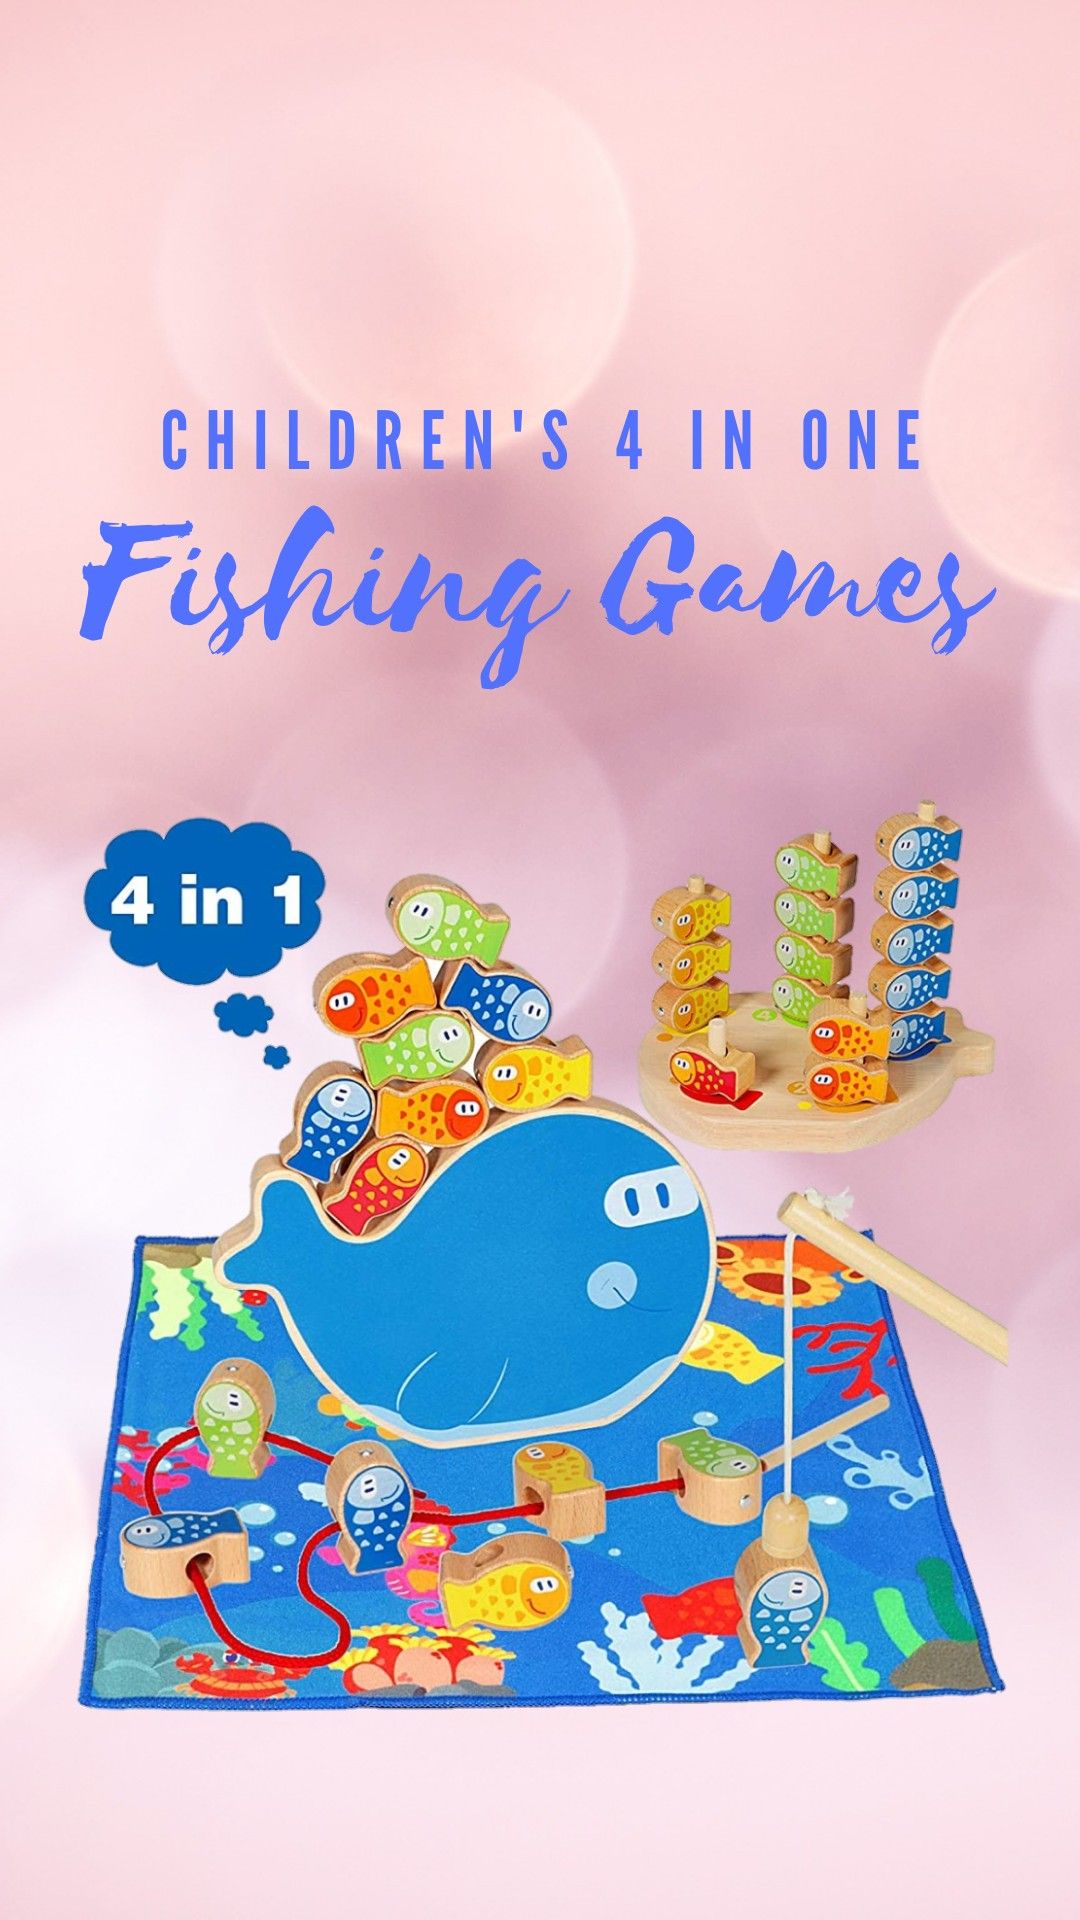 Children's 4 in 1 Fishing Games